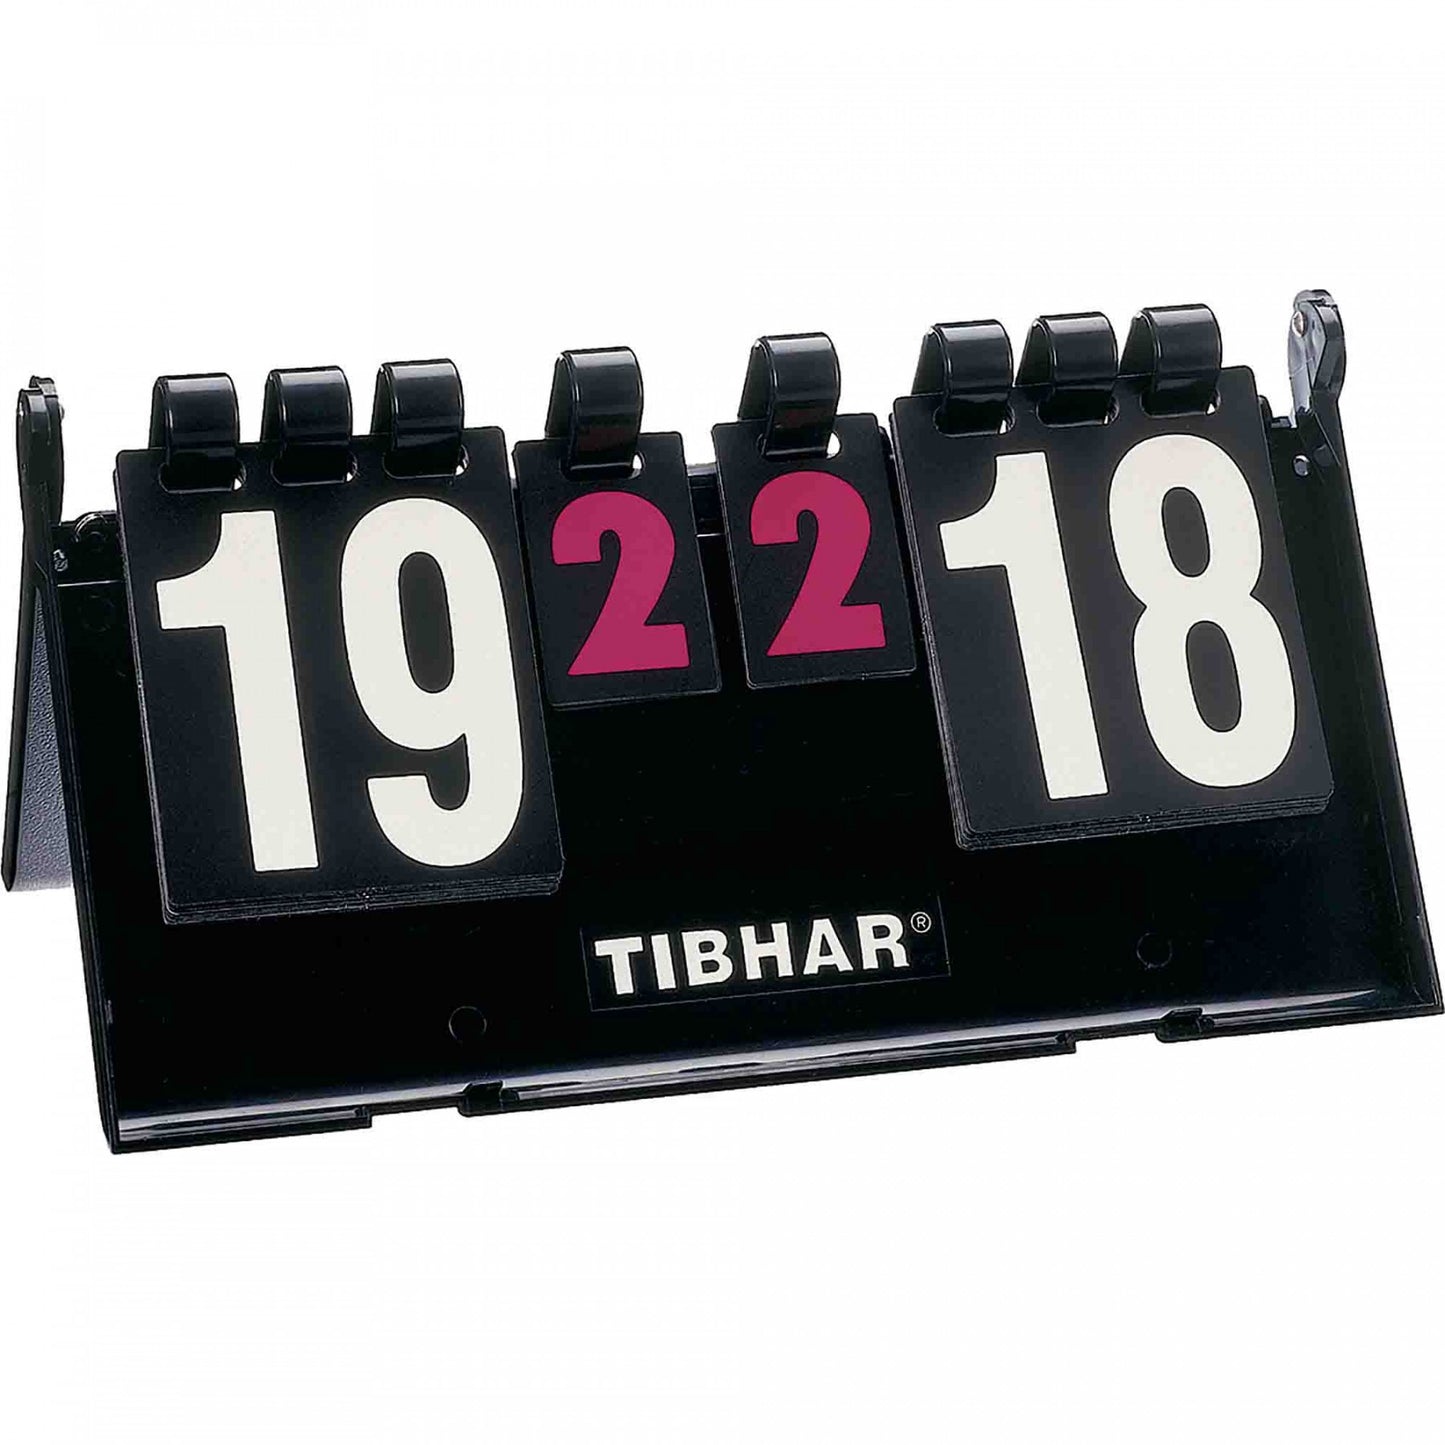 Tibhar Scorebord Smash - Killypong